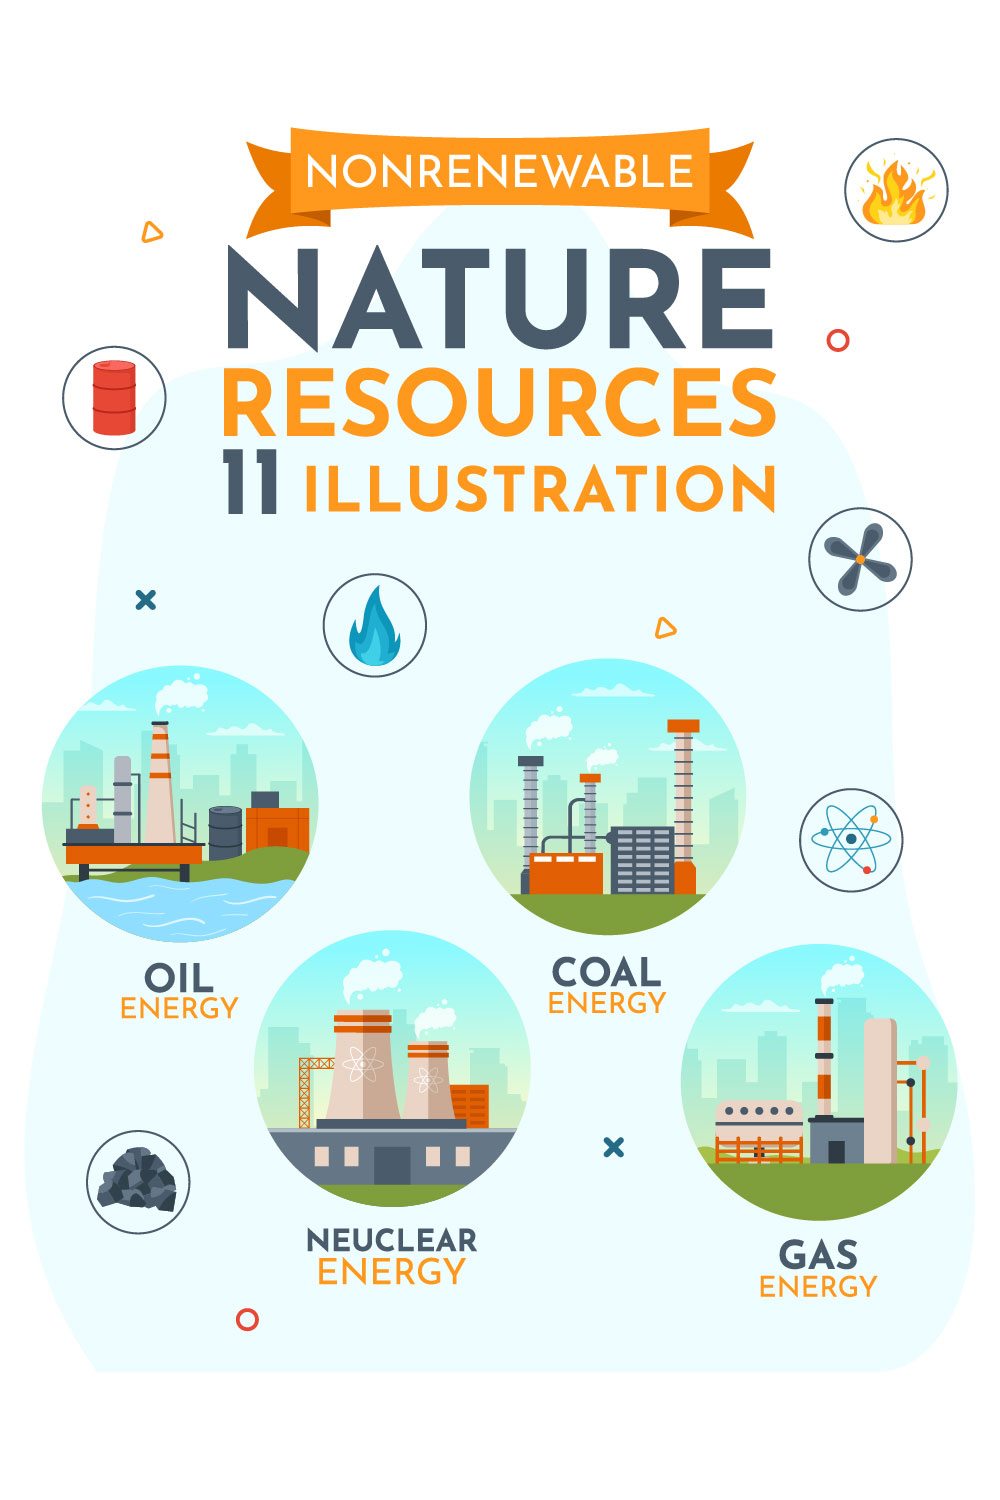 11 Non Renewable Sources of Energy Illustration pinterest preview image.